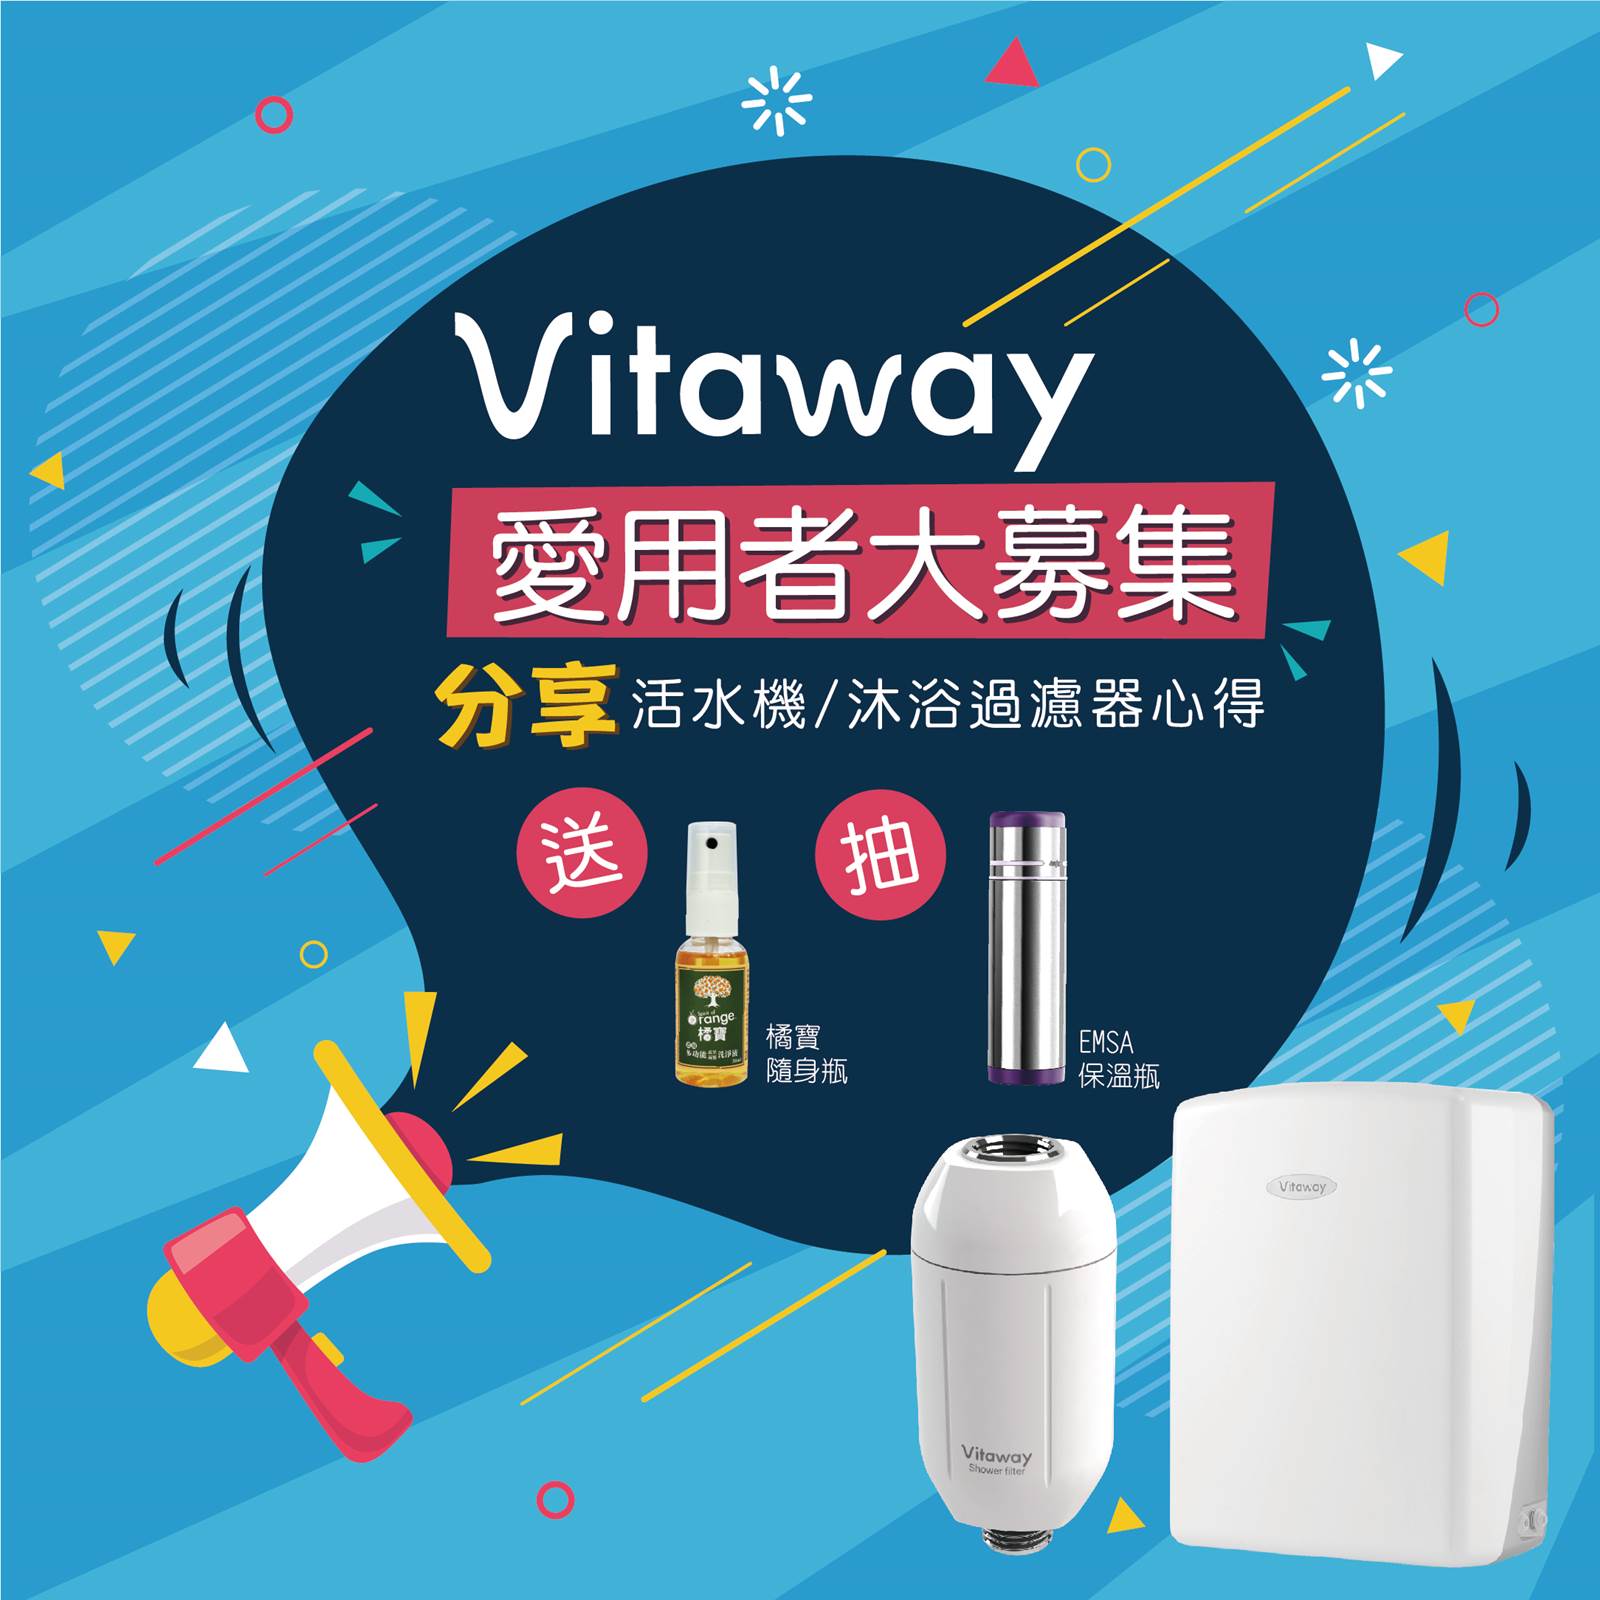 Vitaway愛用者大募集-活水機-沐浴器-心得分享抽獎-2020